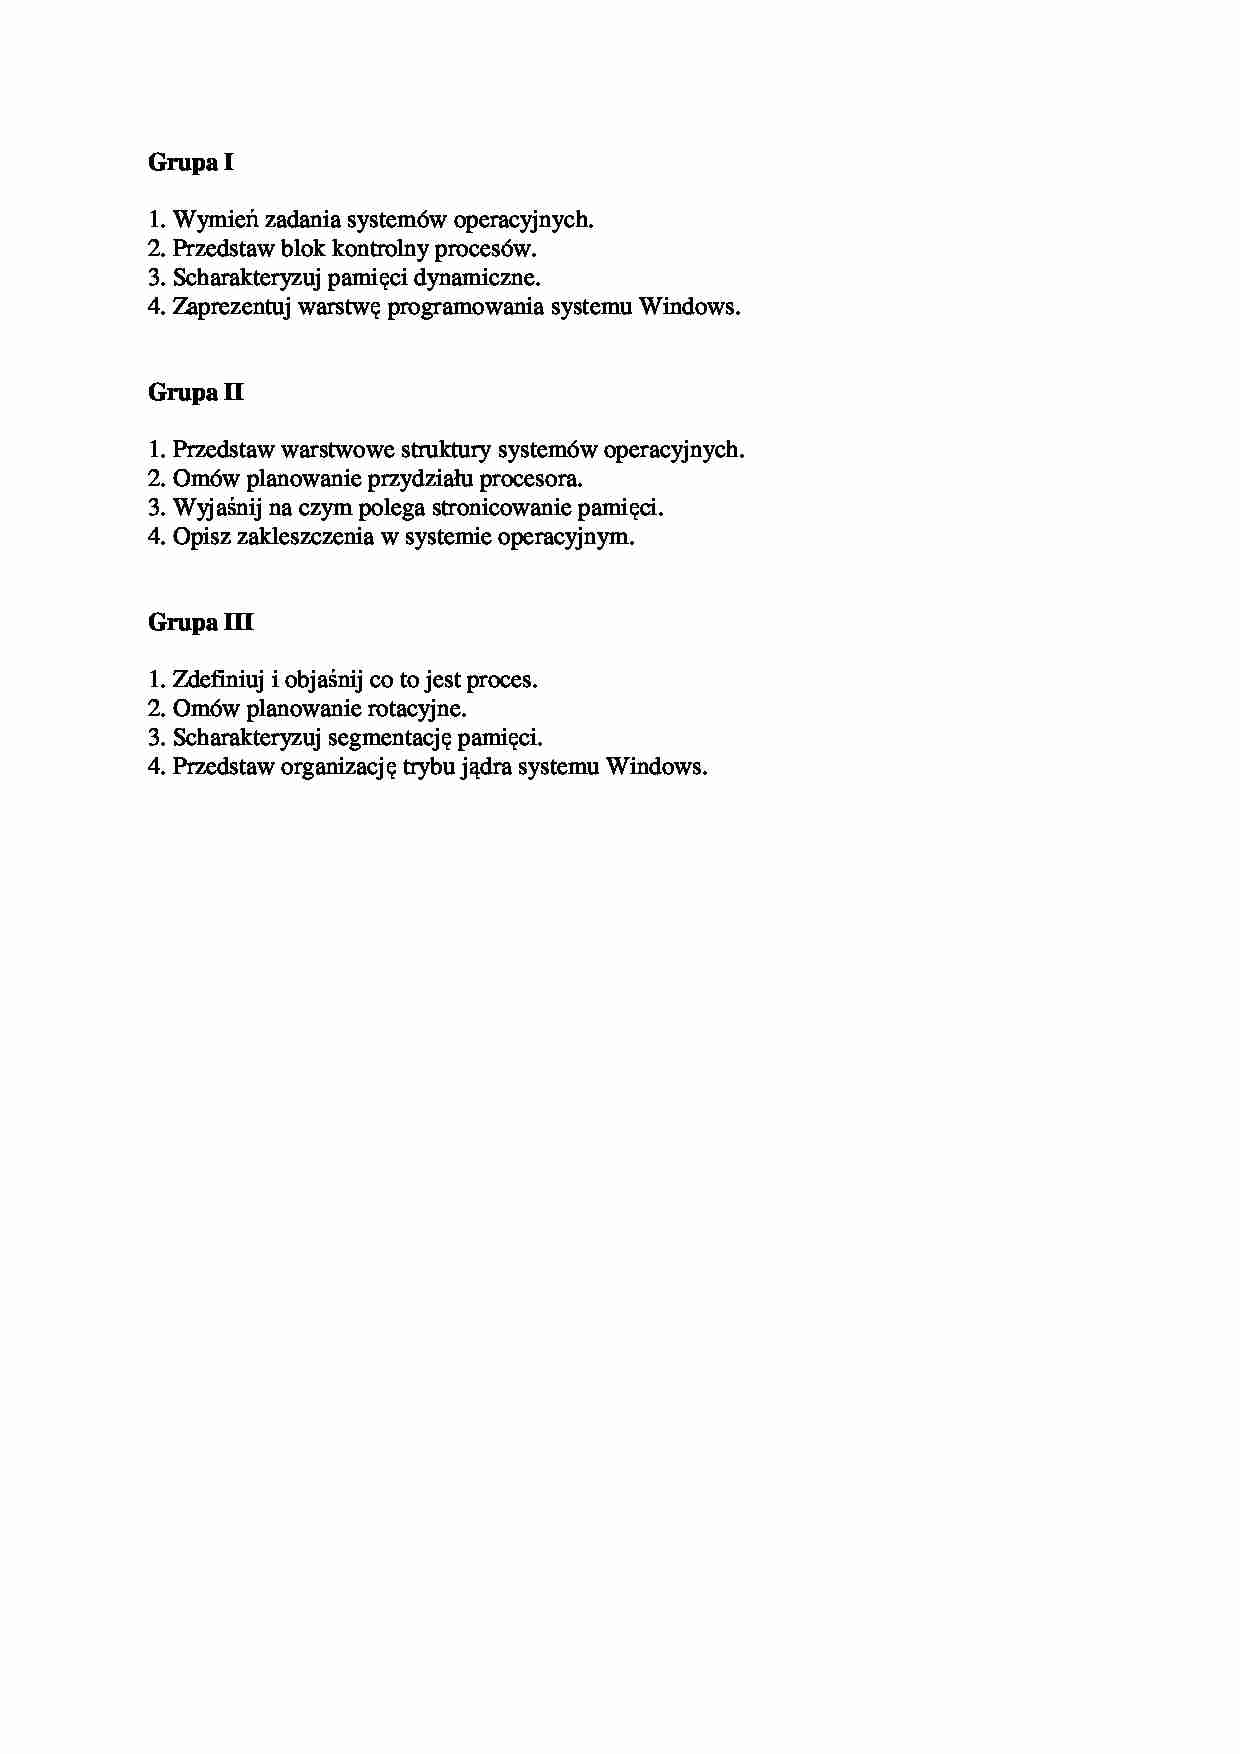 Pytania na egzamin - systemy operacyjne - strona 1